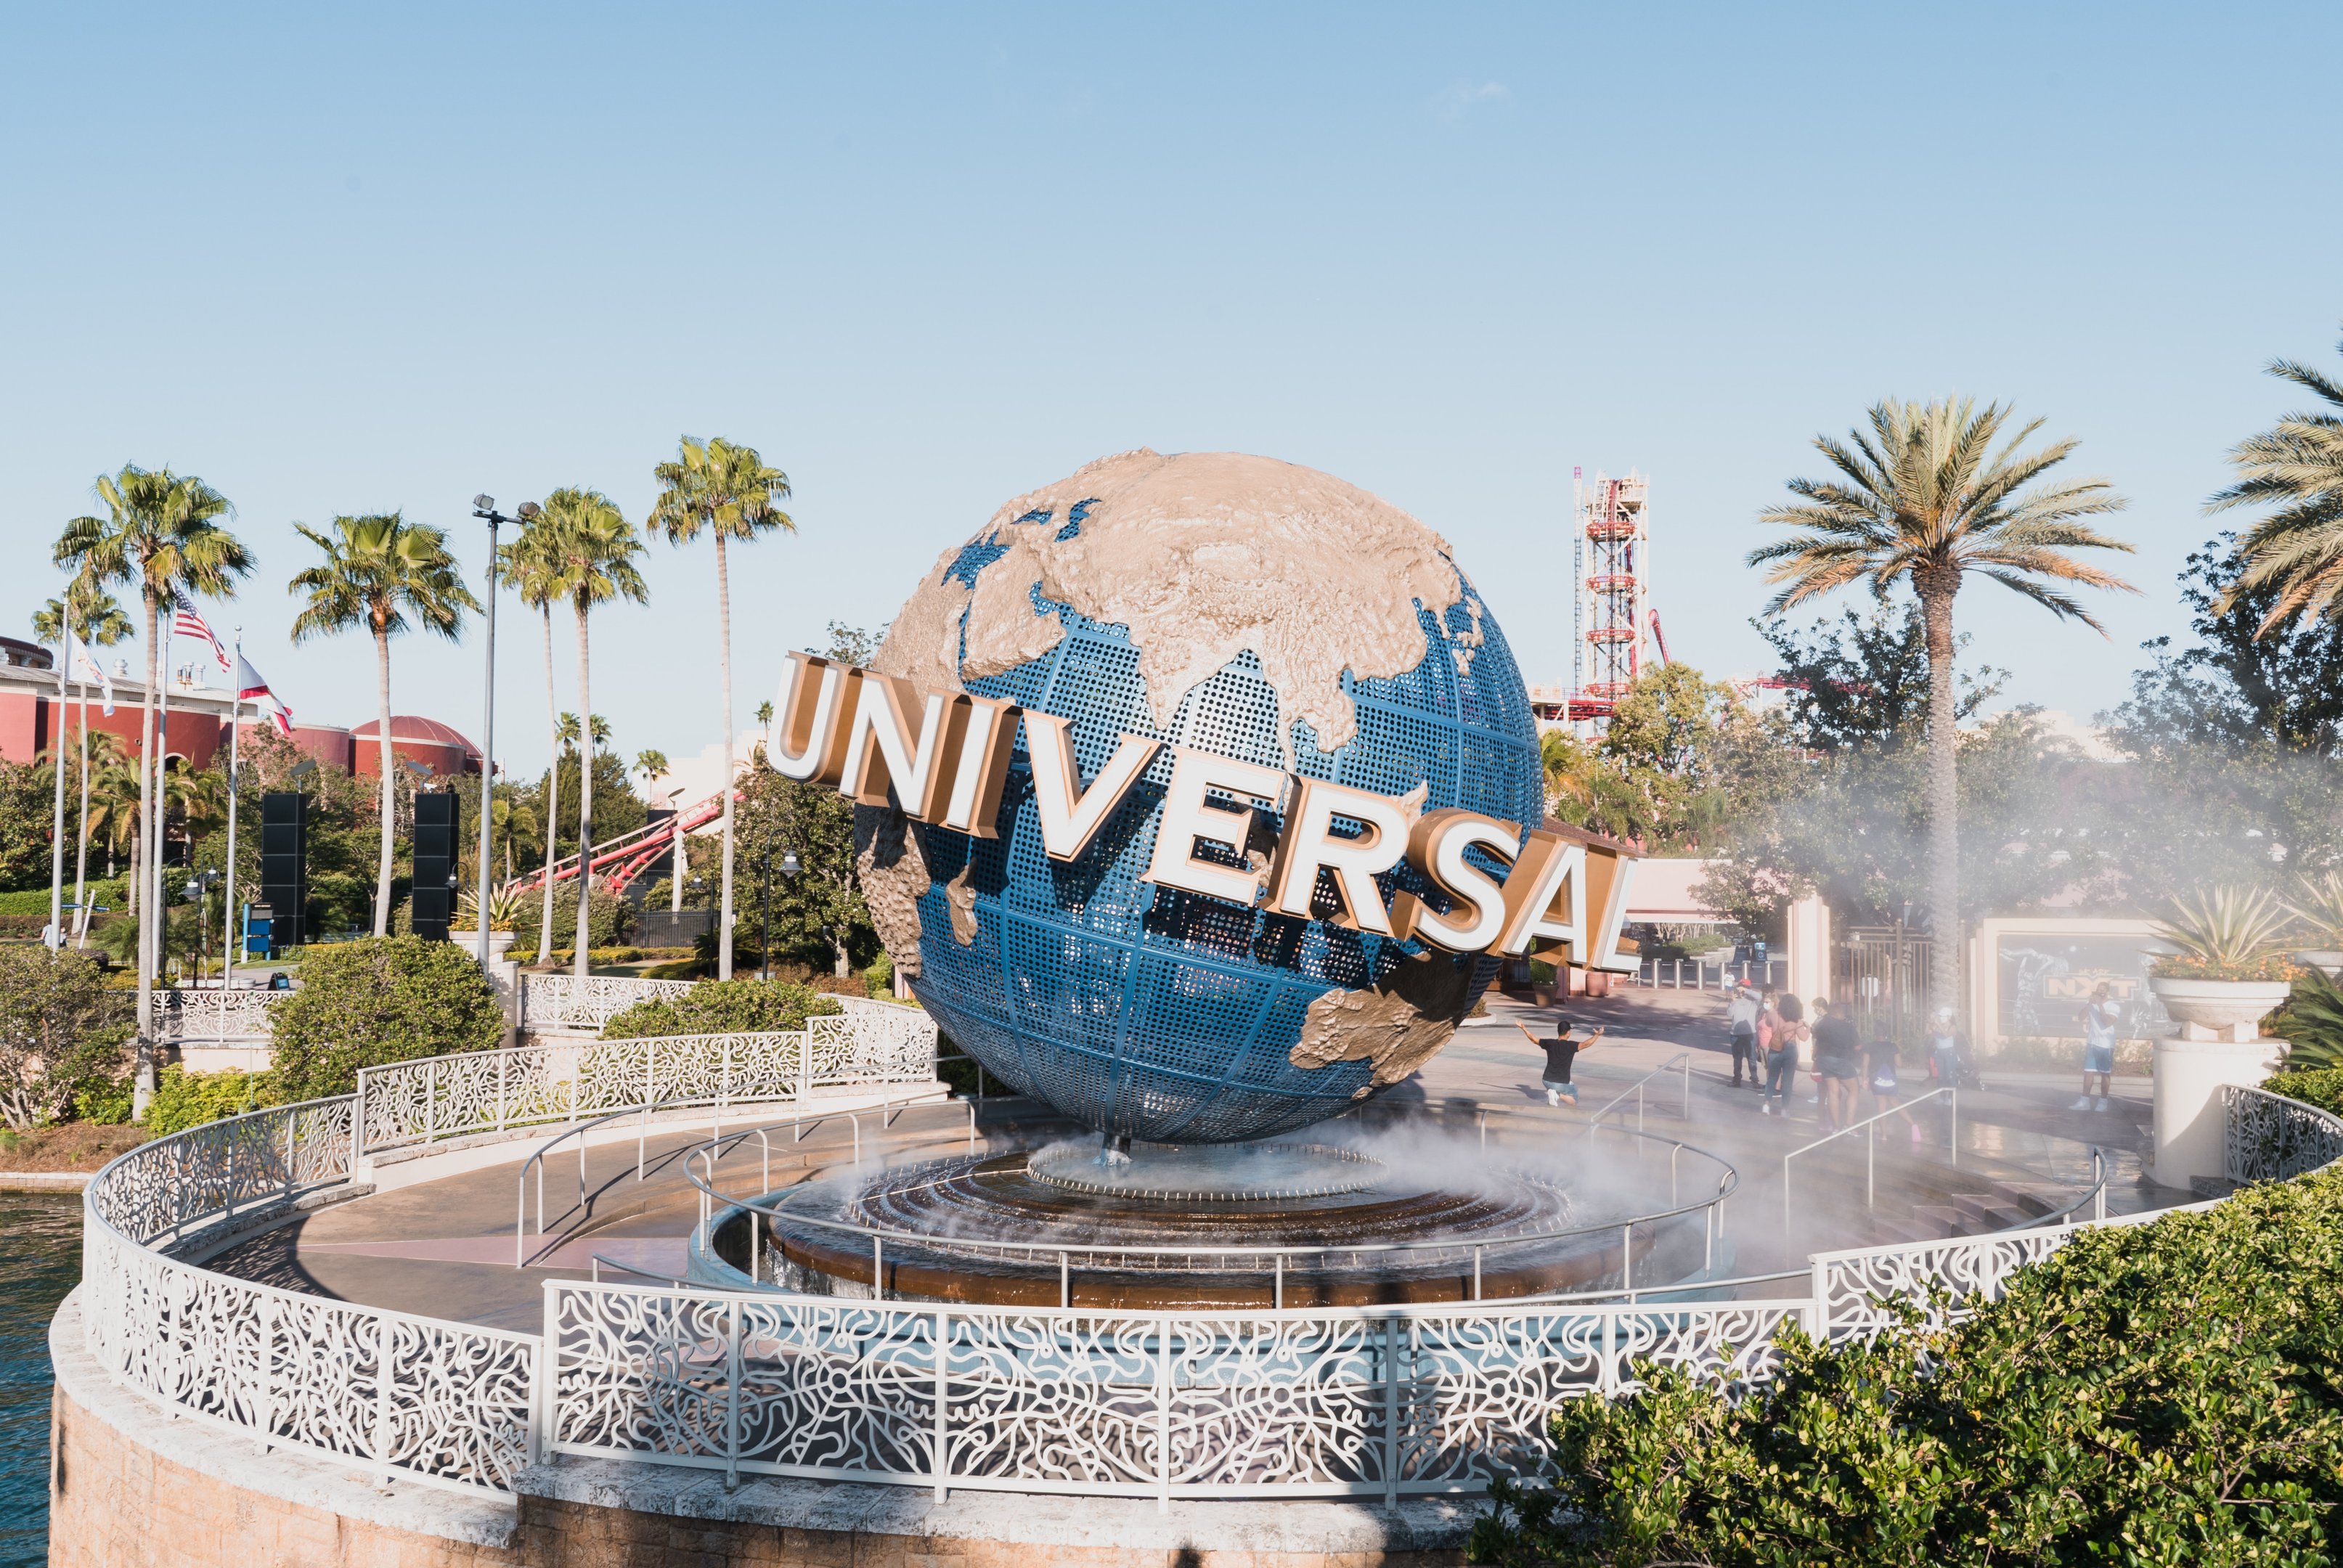 Universal Studios Hollywood in Los Angeles, CA. Photo by Aditya